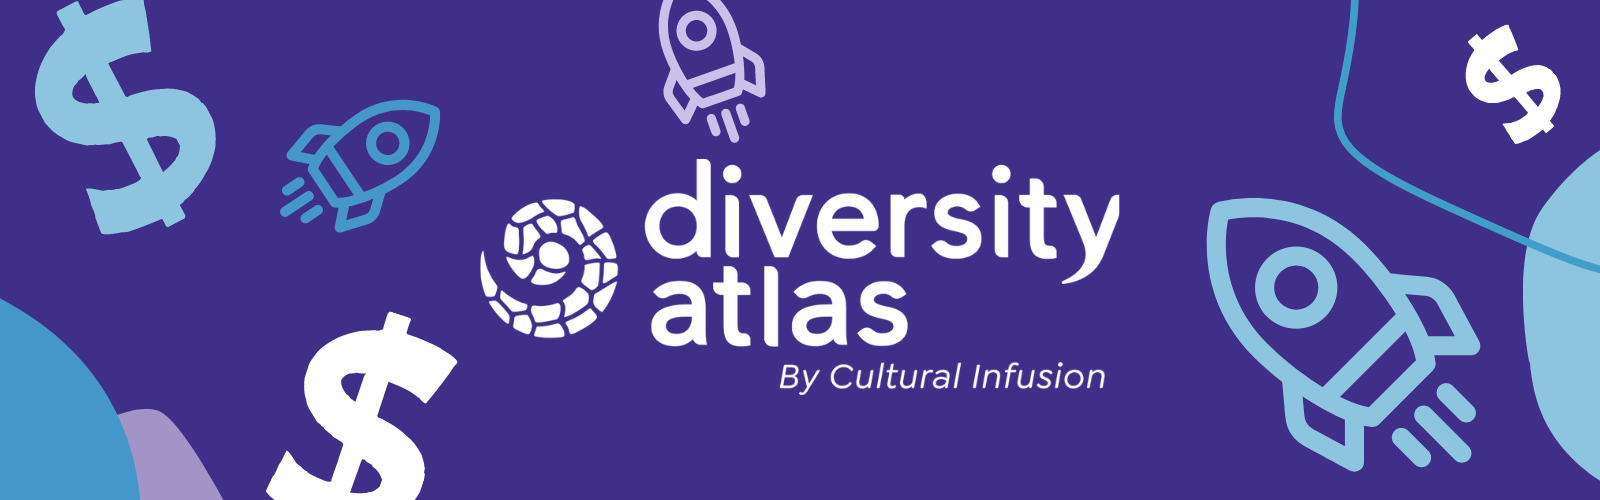 Featured image for “Diversity Atlas Secure $AUD 6 Million in Bridge Funding”